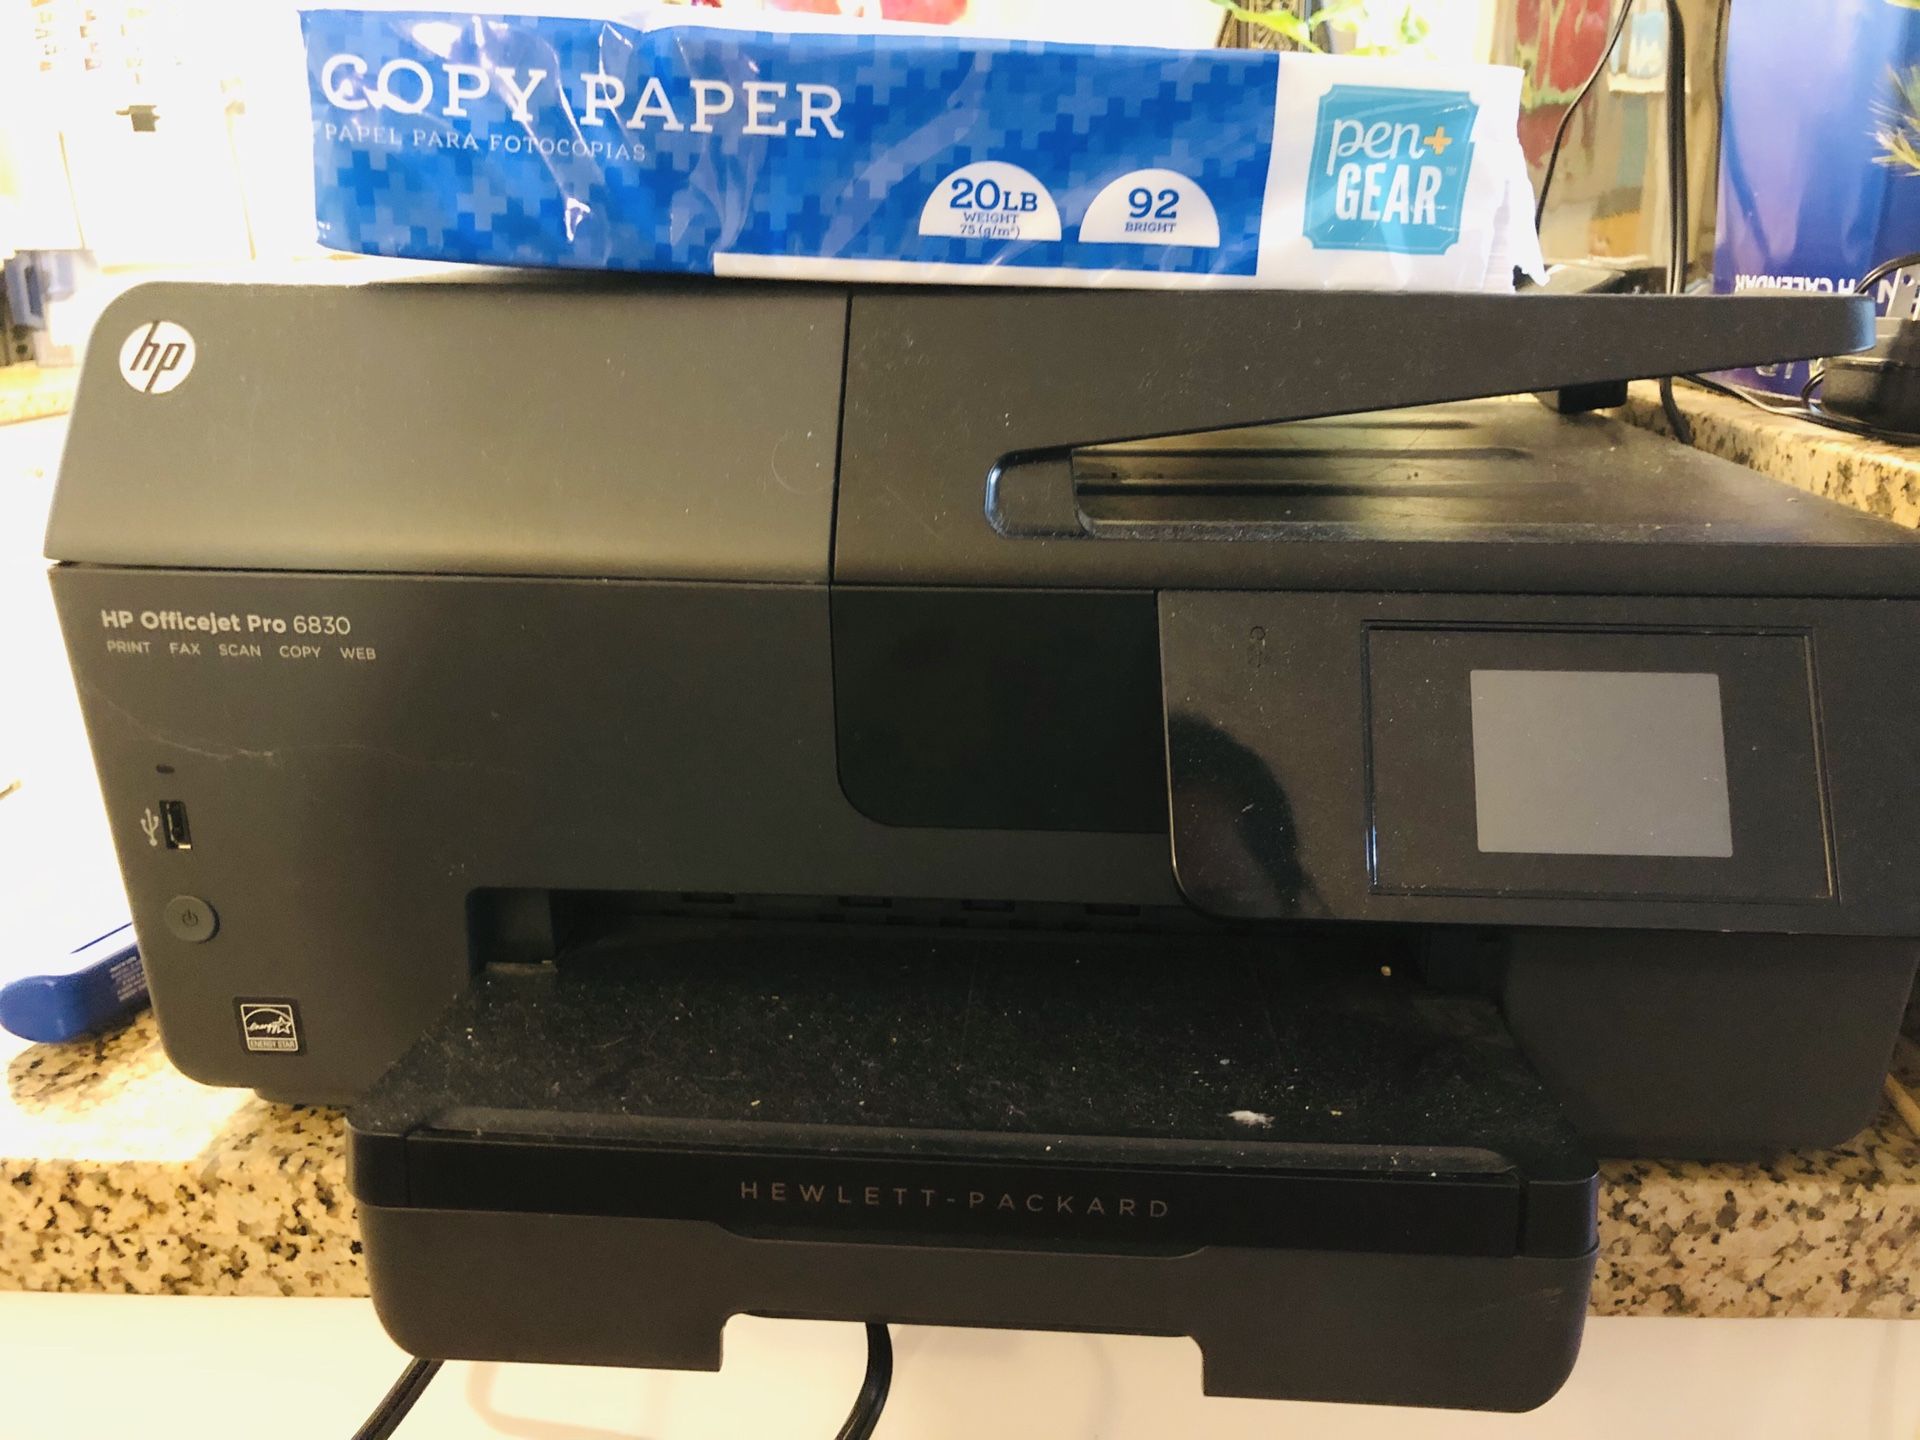 Wireless Printer and copy paper (print scan fax copy web)